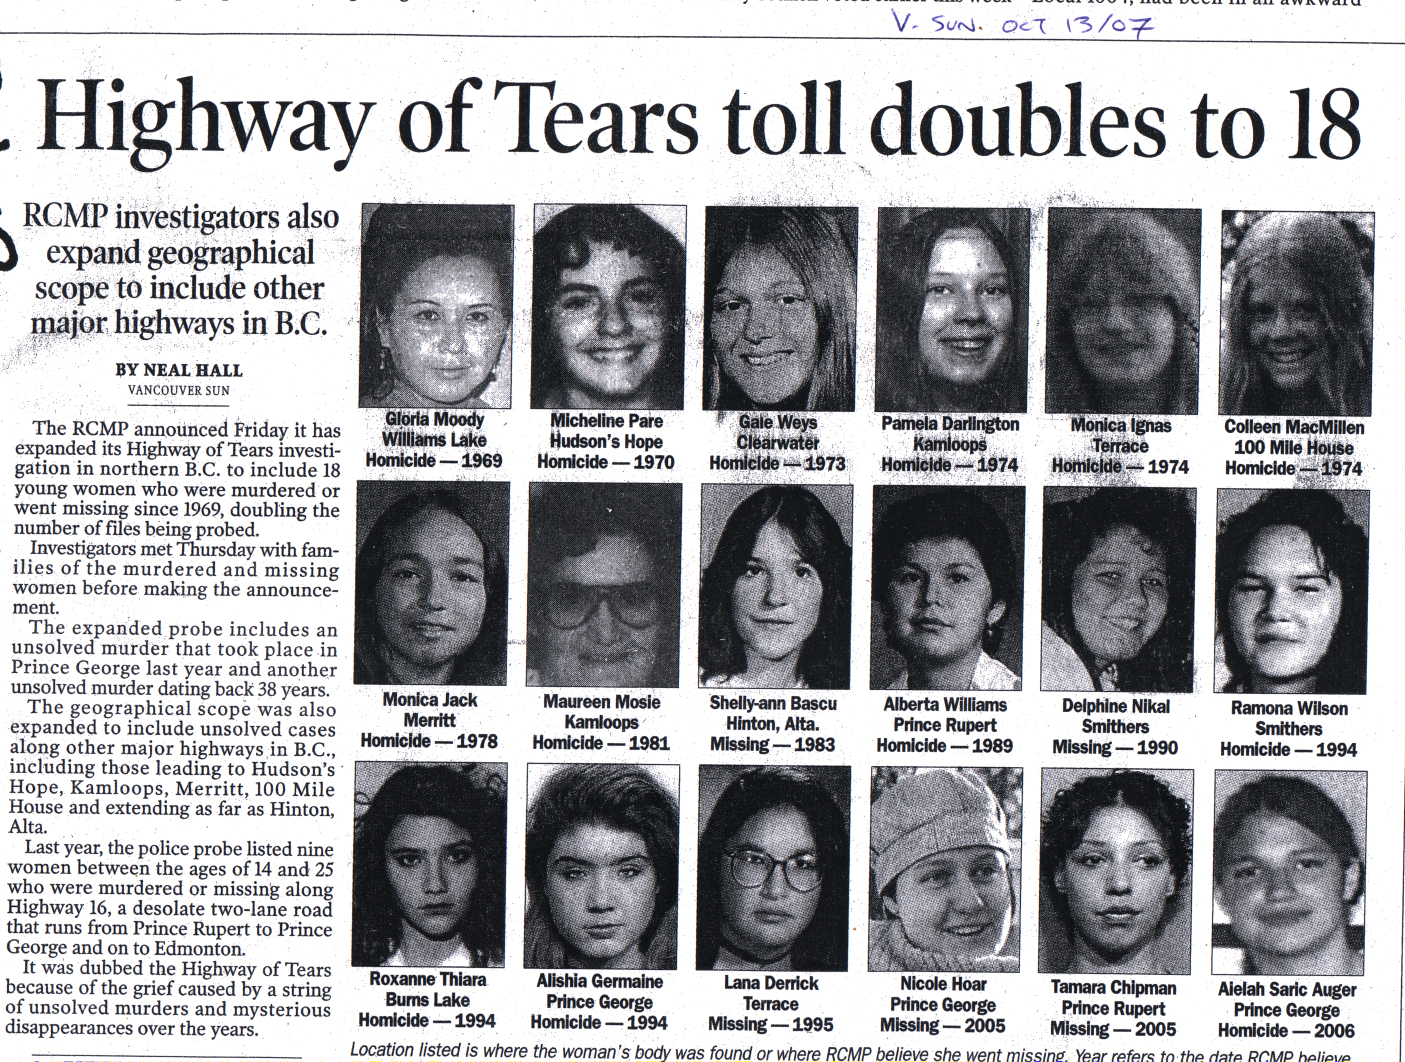 http://warriorpublications.files.wordpress.com/2013/02/missing-women-highway-of-tears-news.jpg